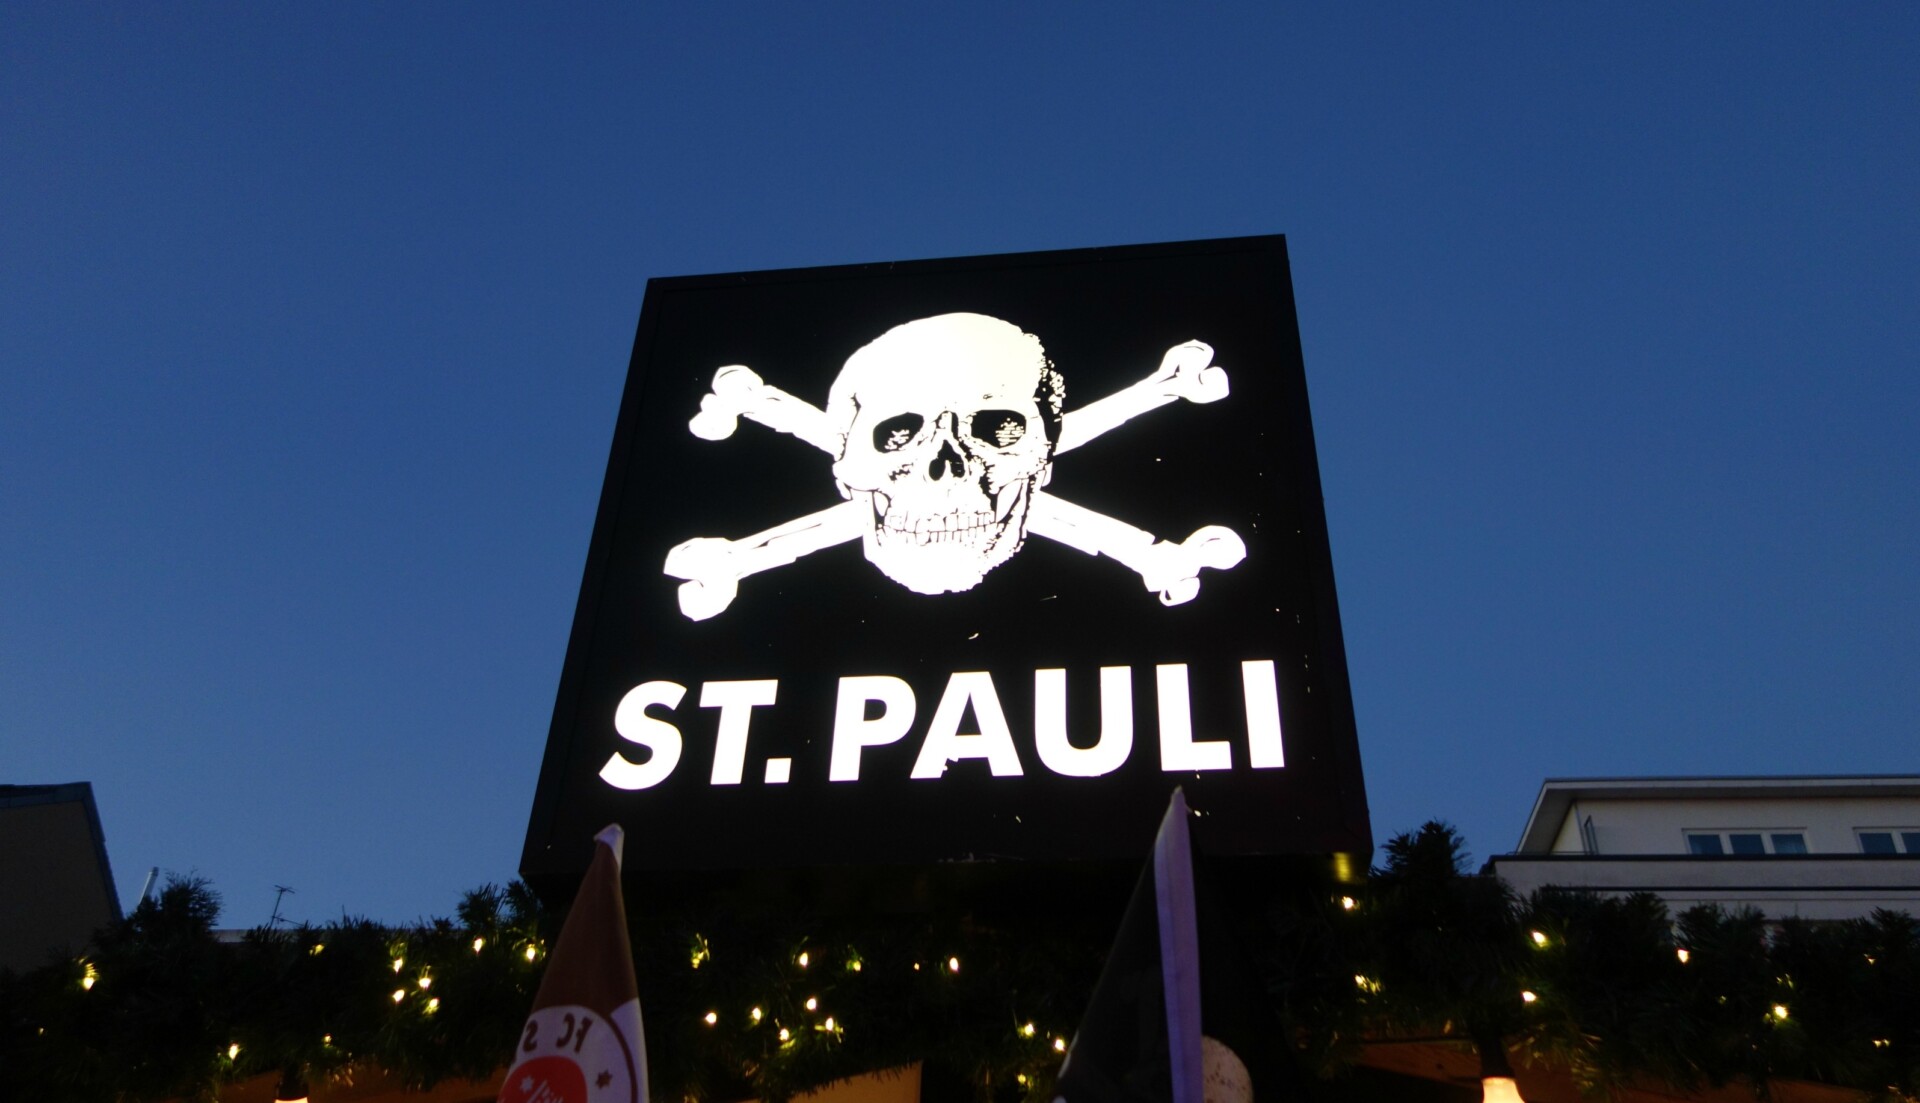 ST. PAULI logo